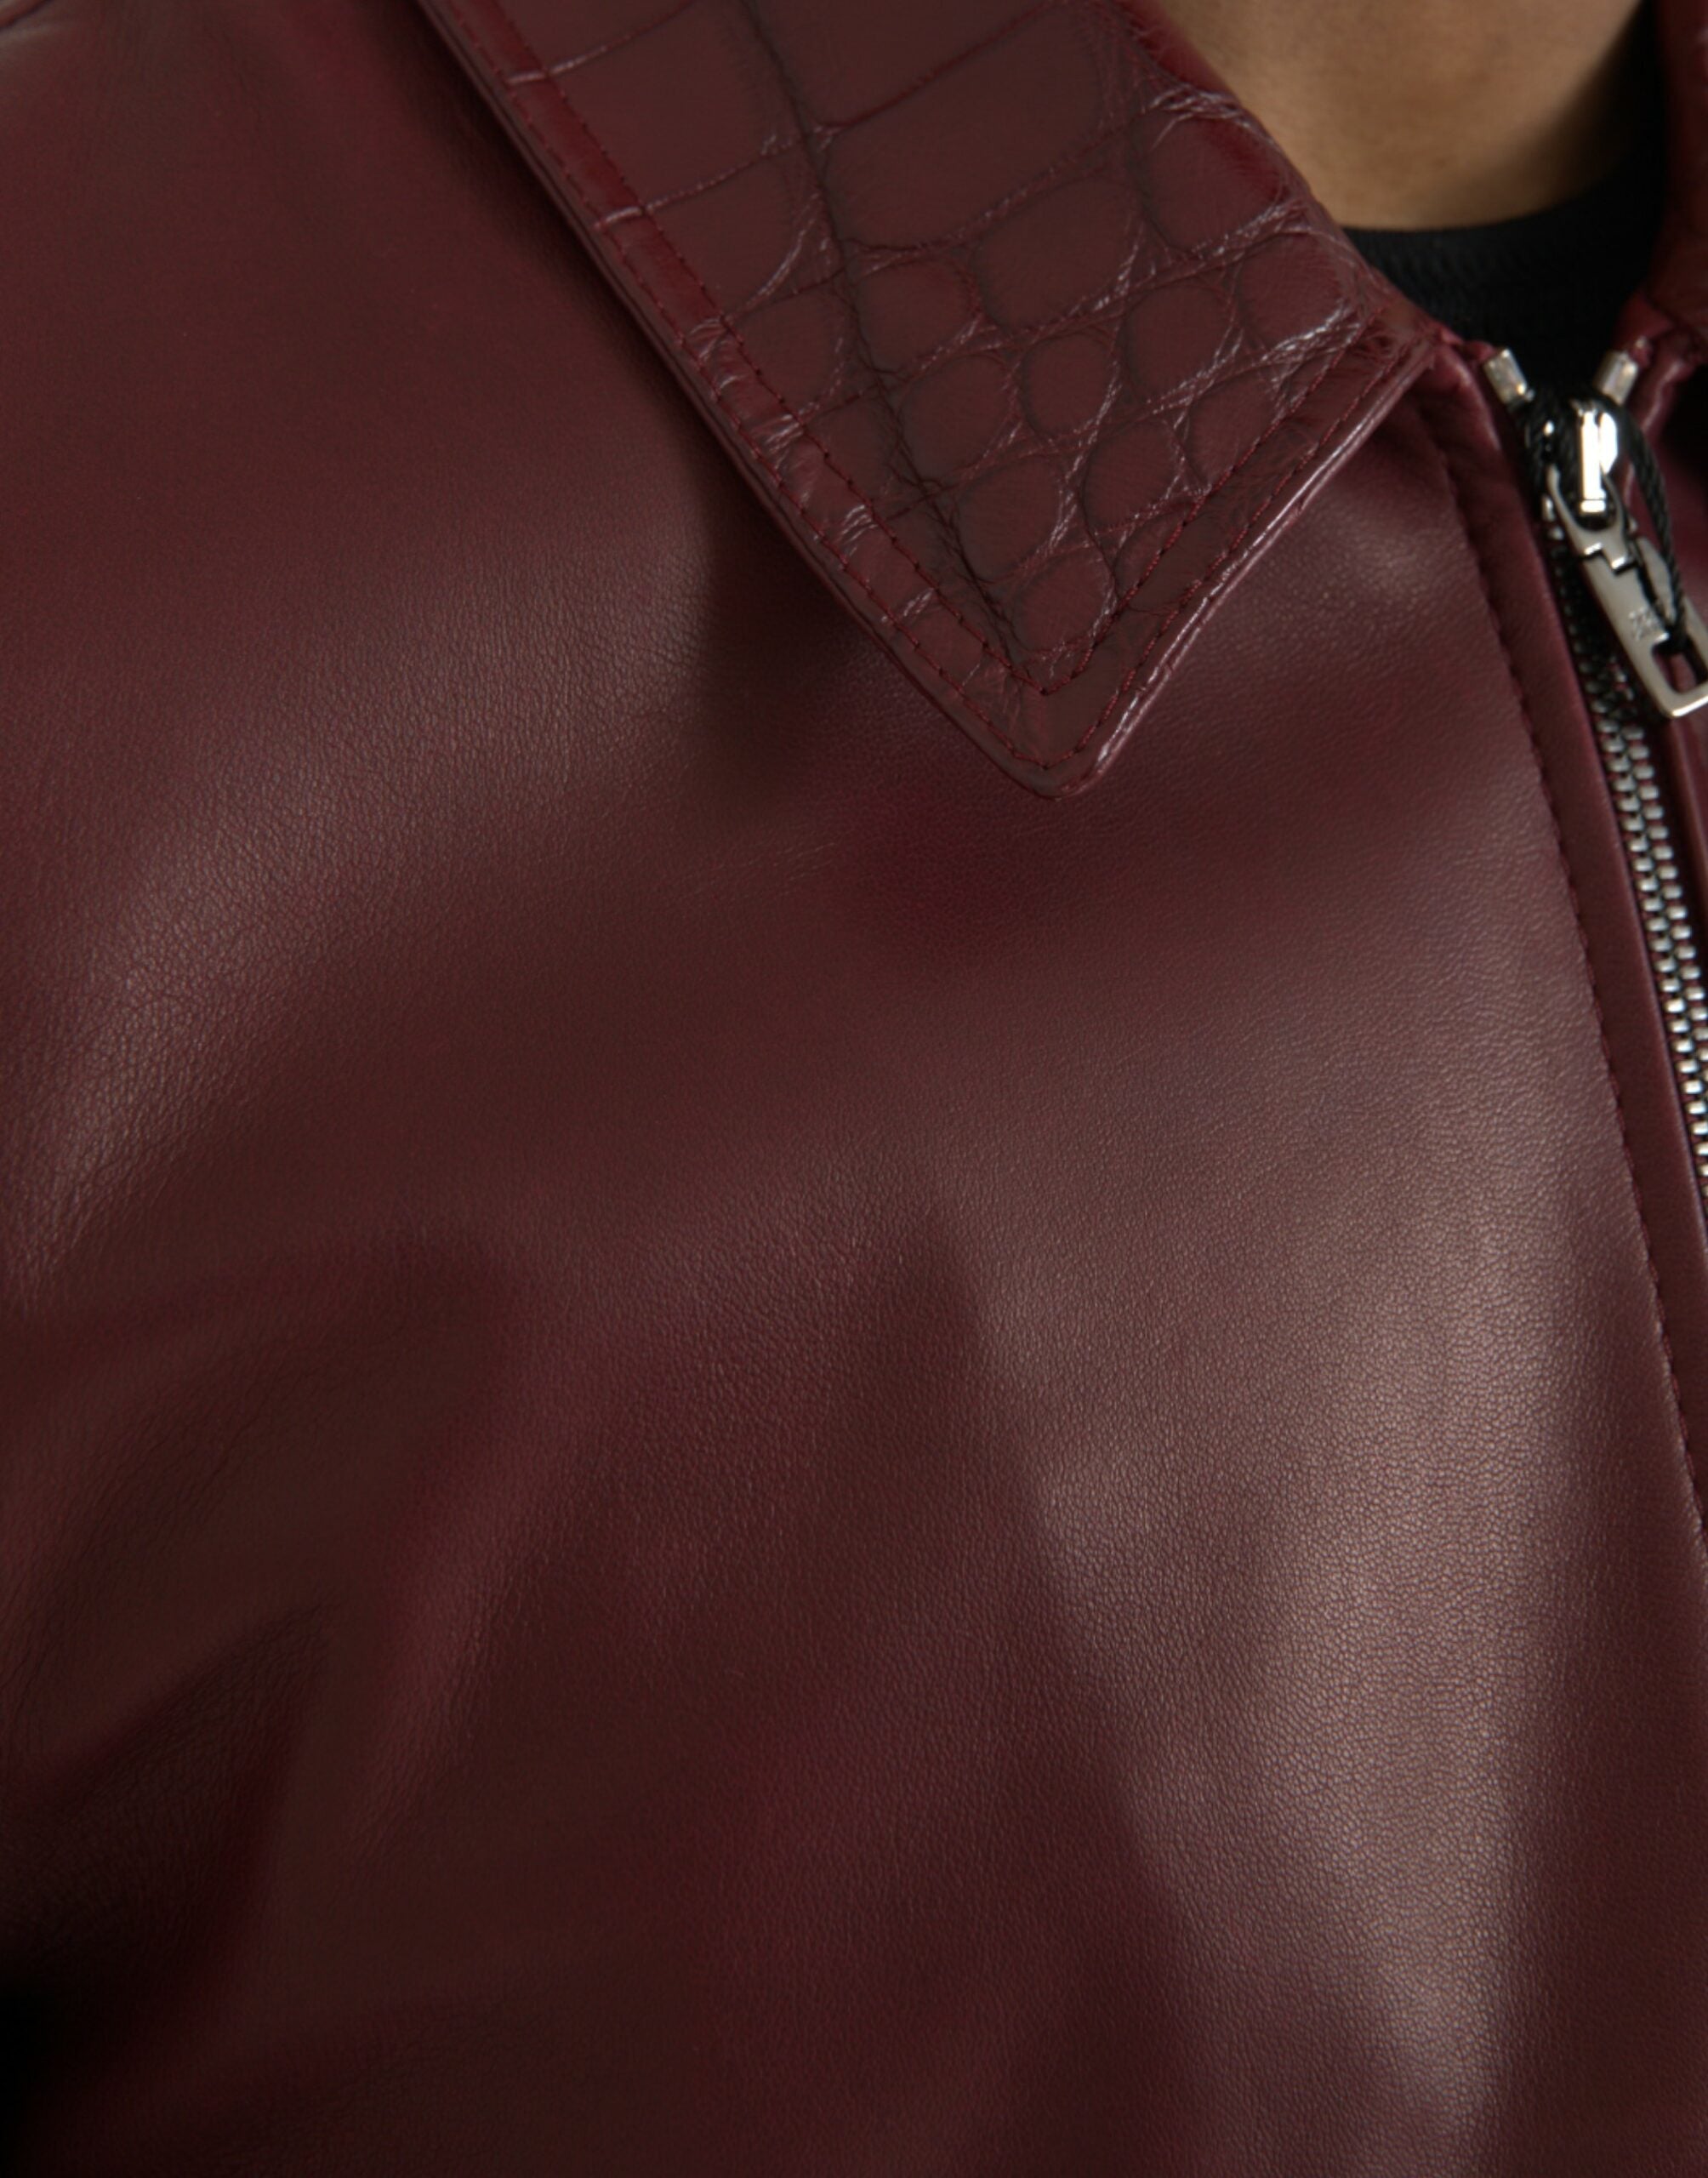 Dolce & Gabbana Maroon Exotic Læder Zip Biker Coat Jakke & Frakke-Modeoutlet